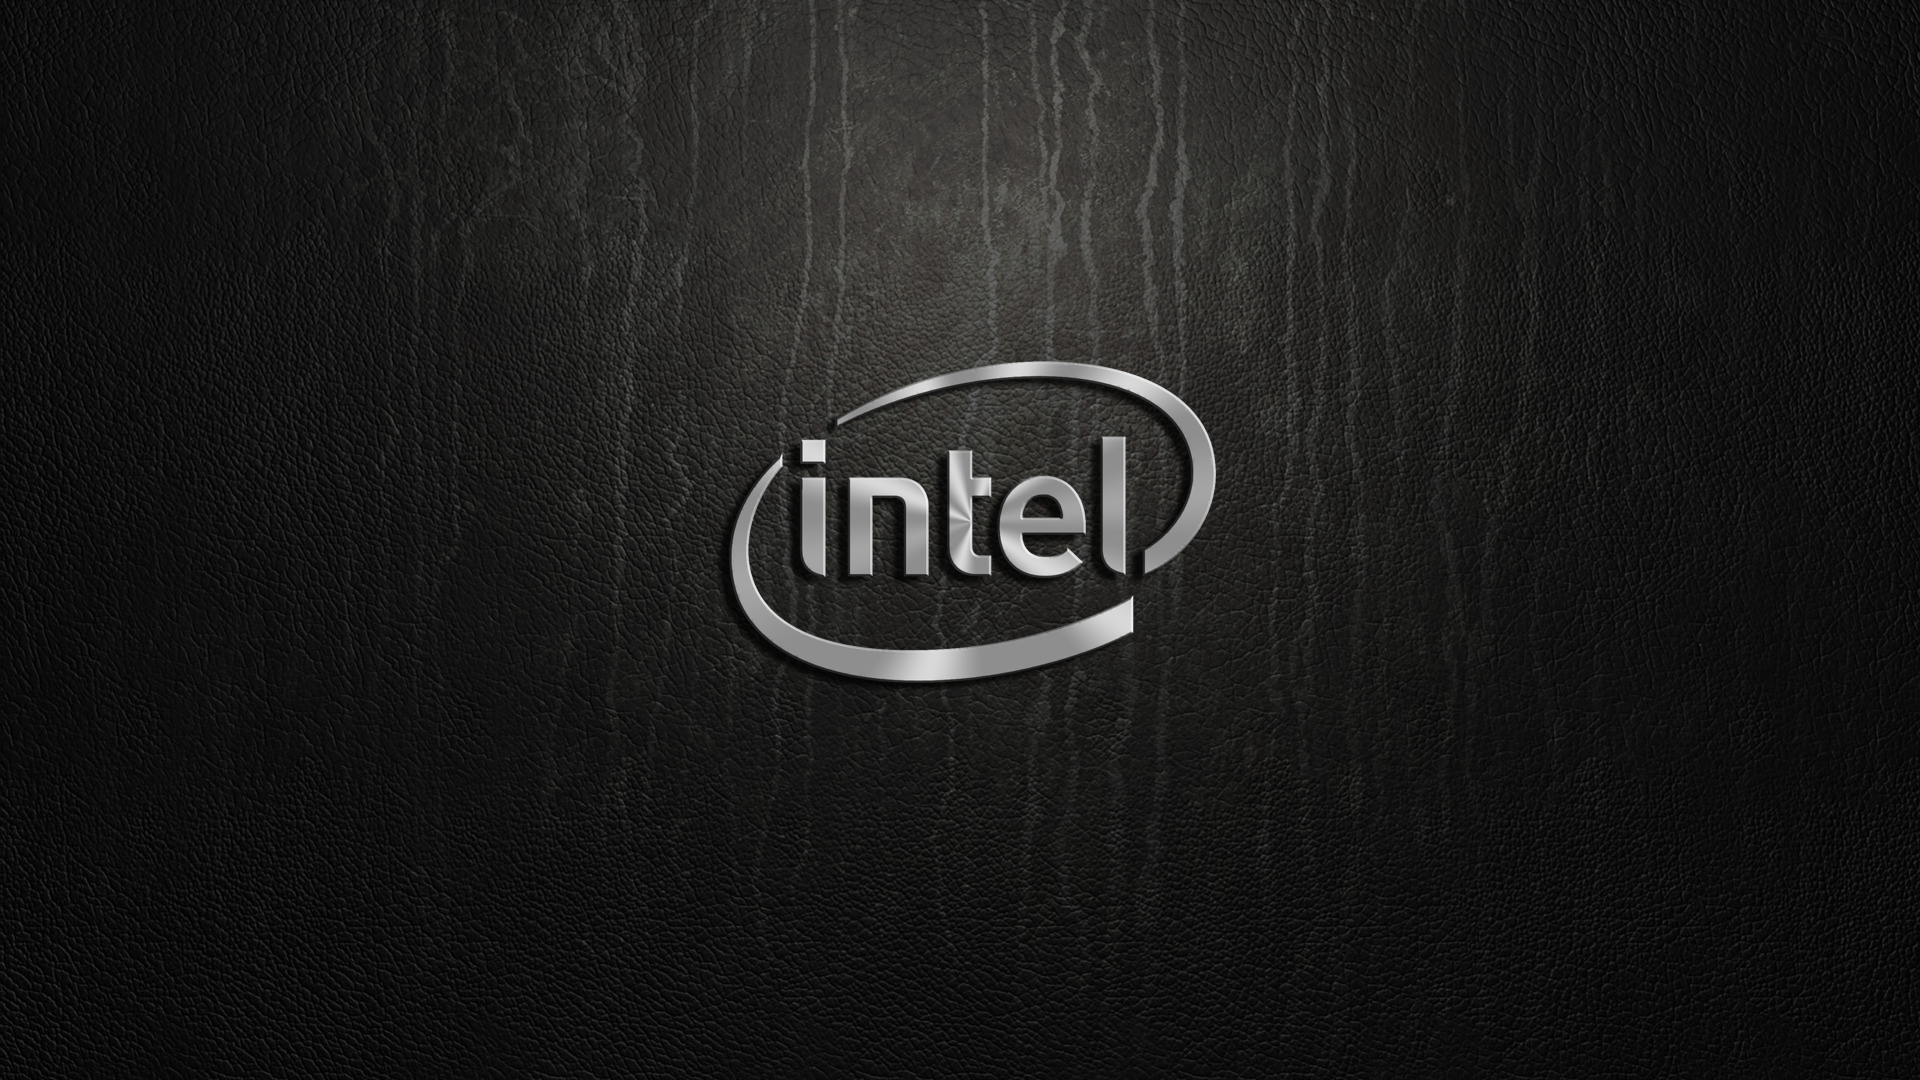 Intel HD Wallpaper. Background Imagex1080